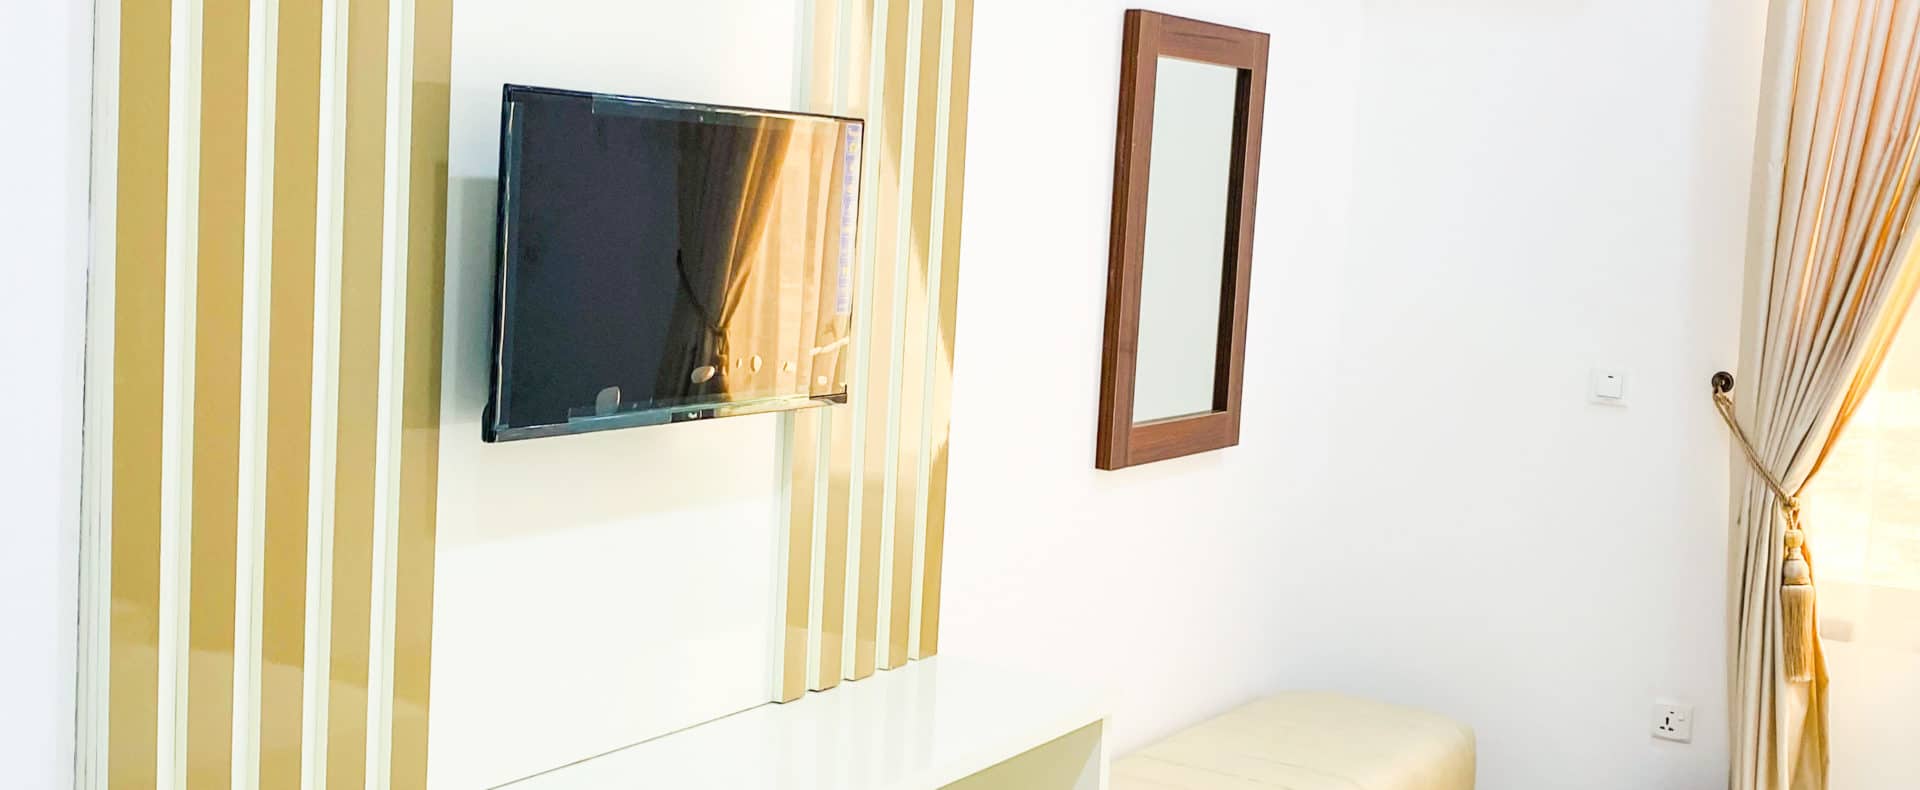 Luxury Private Two Bedroom Apartment In Lekki Phase 1 Lagos Nigeria